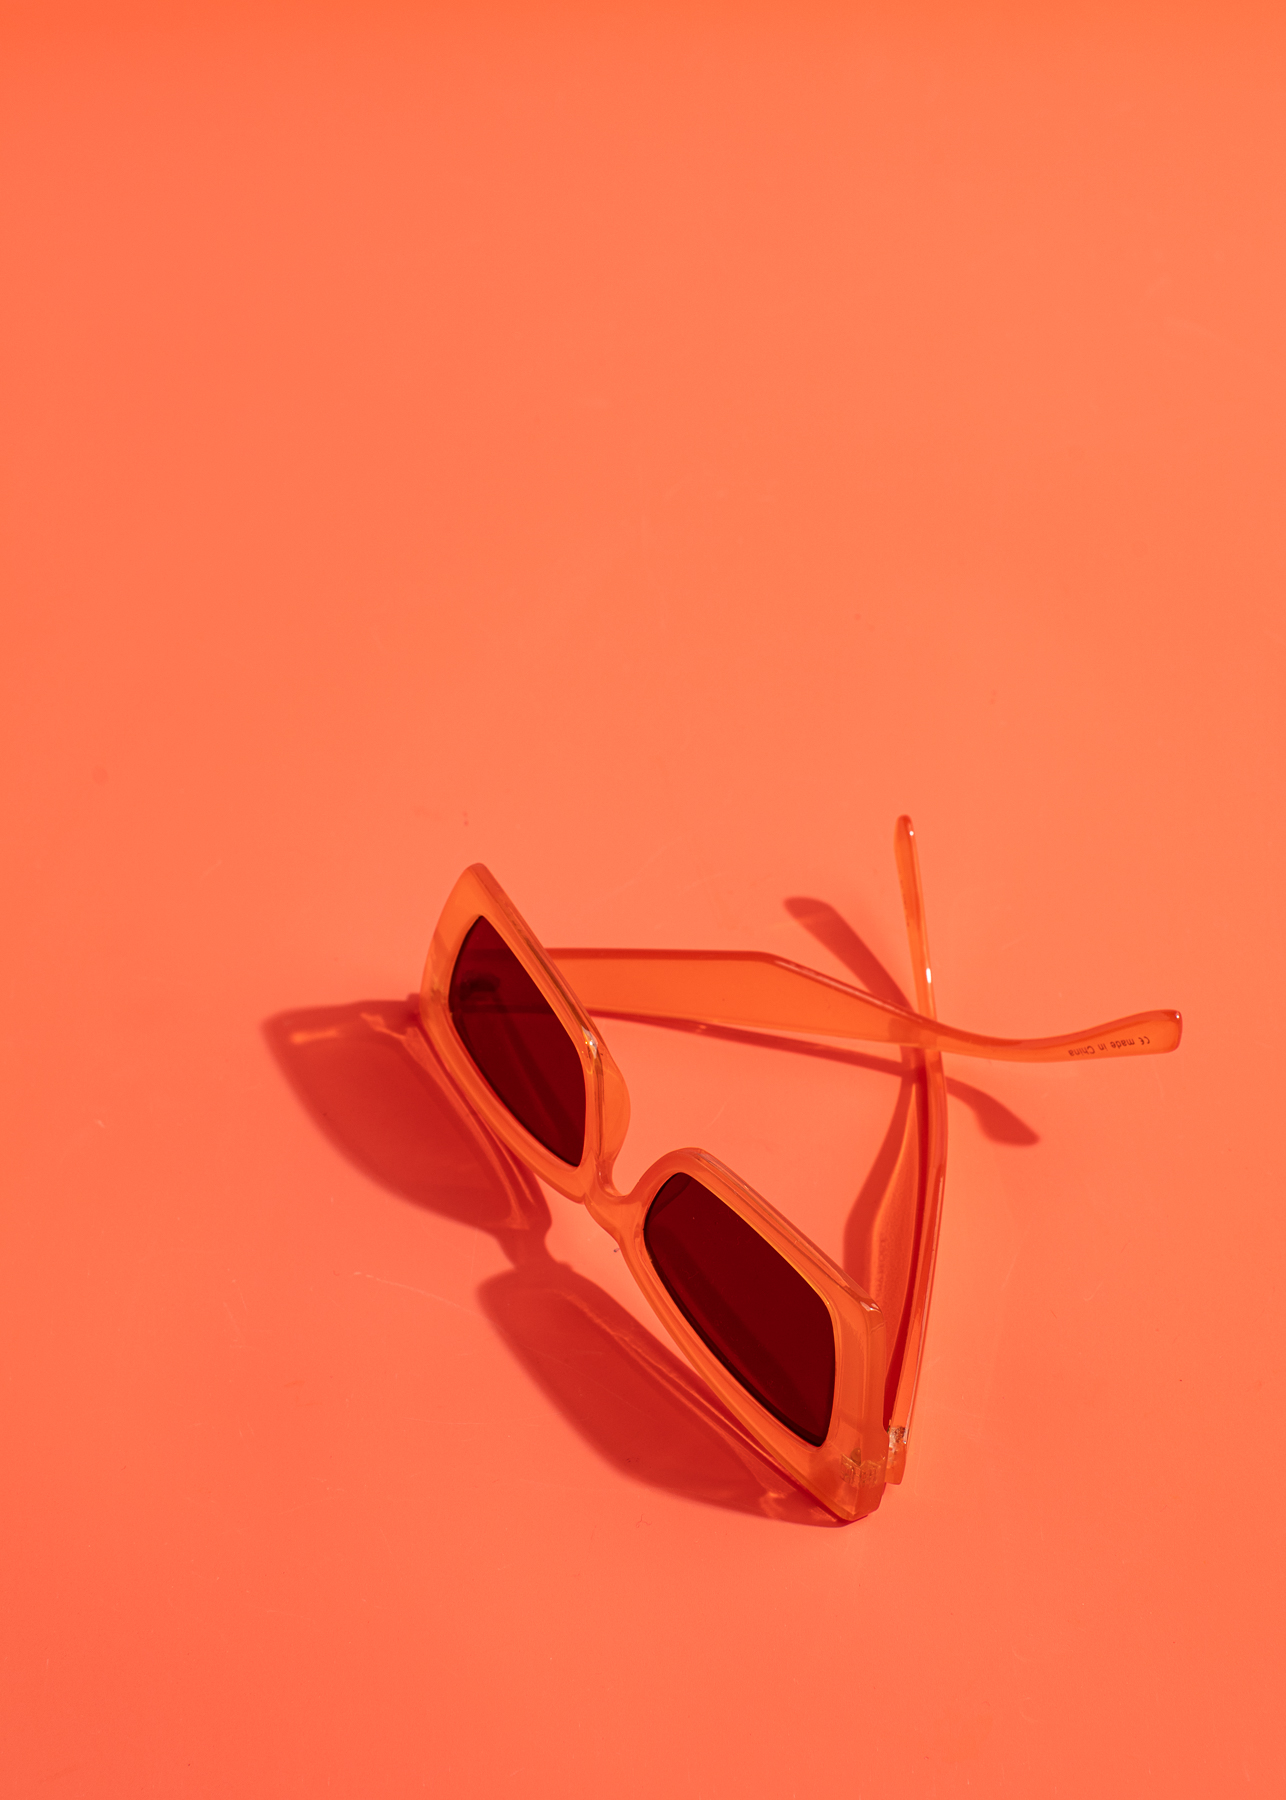 Orange sunglasses on an orange backdrop